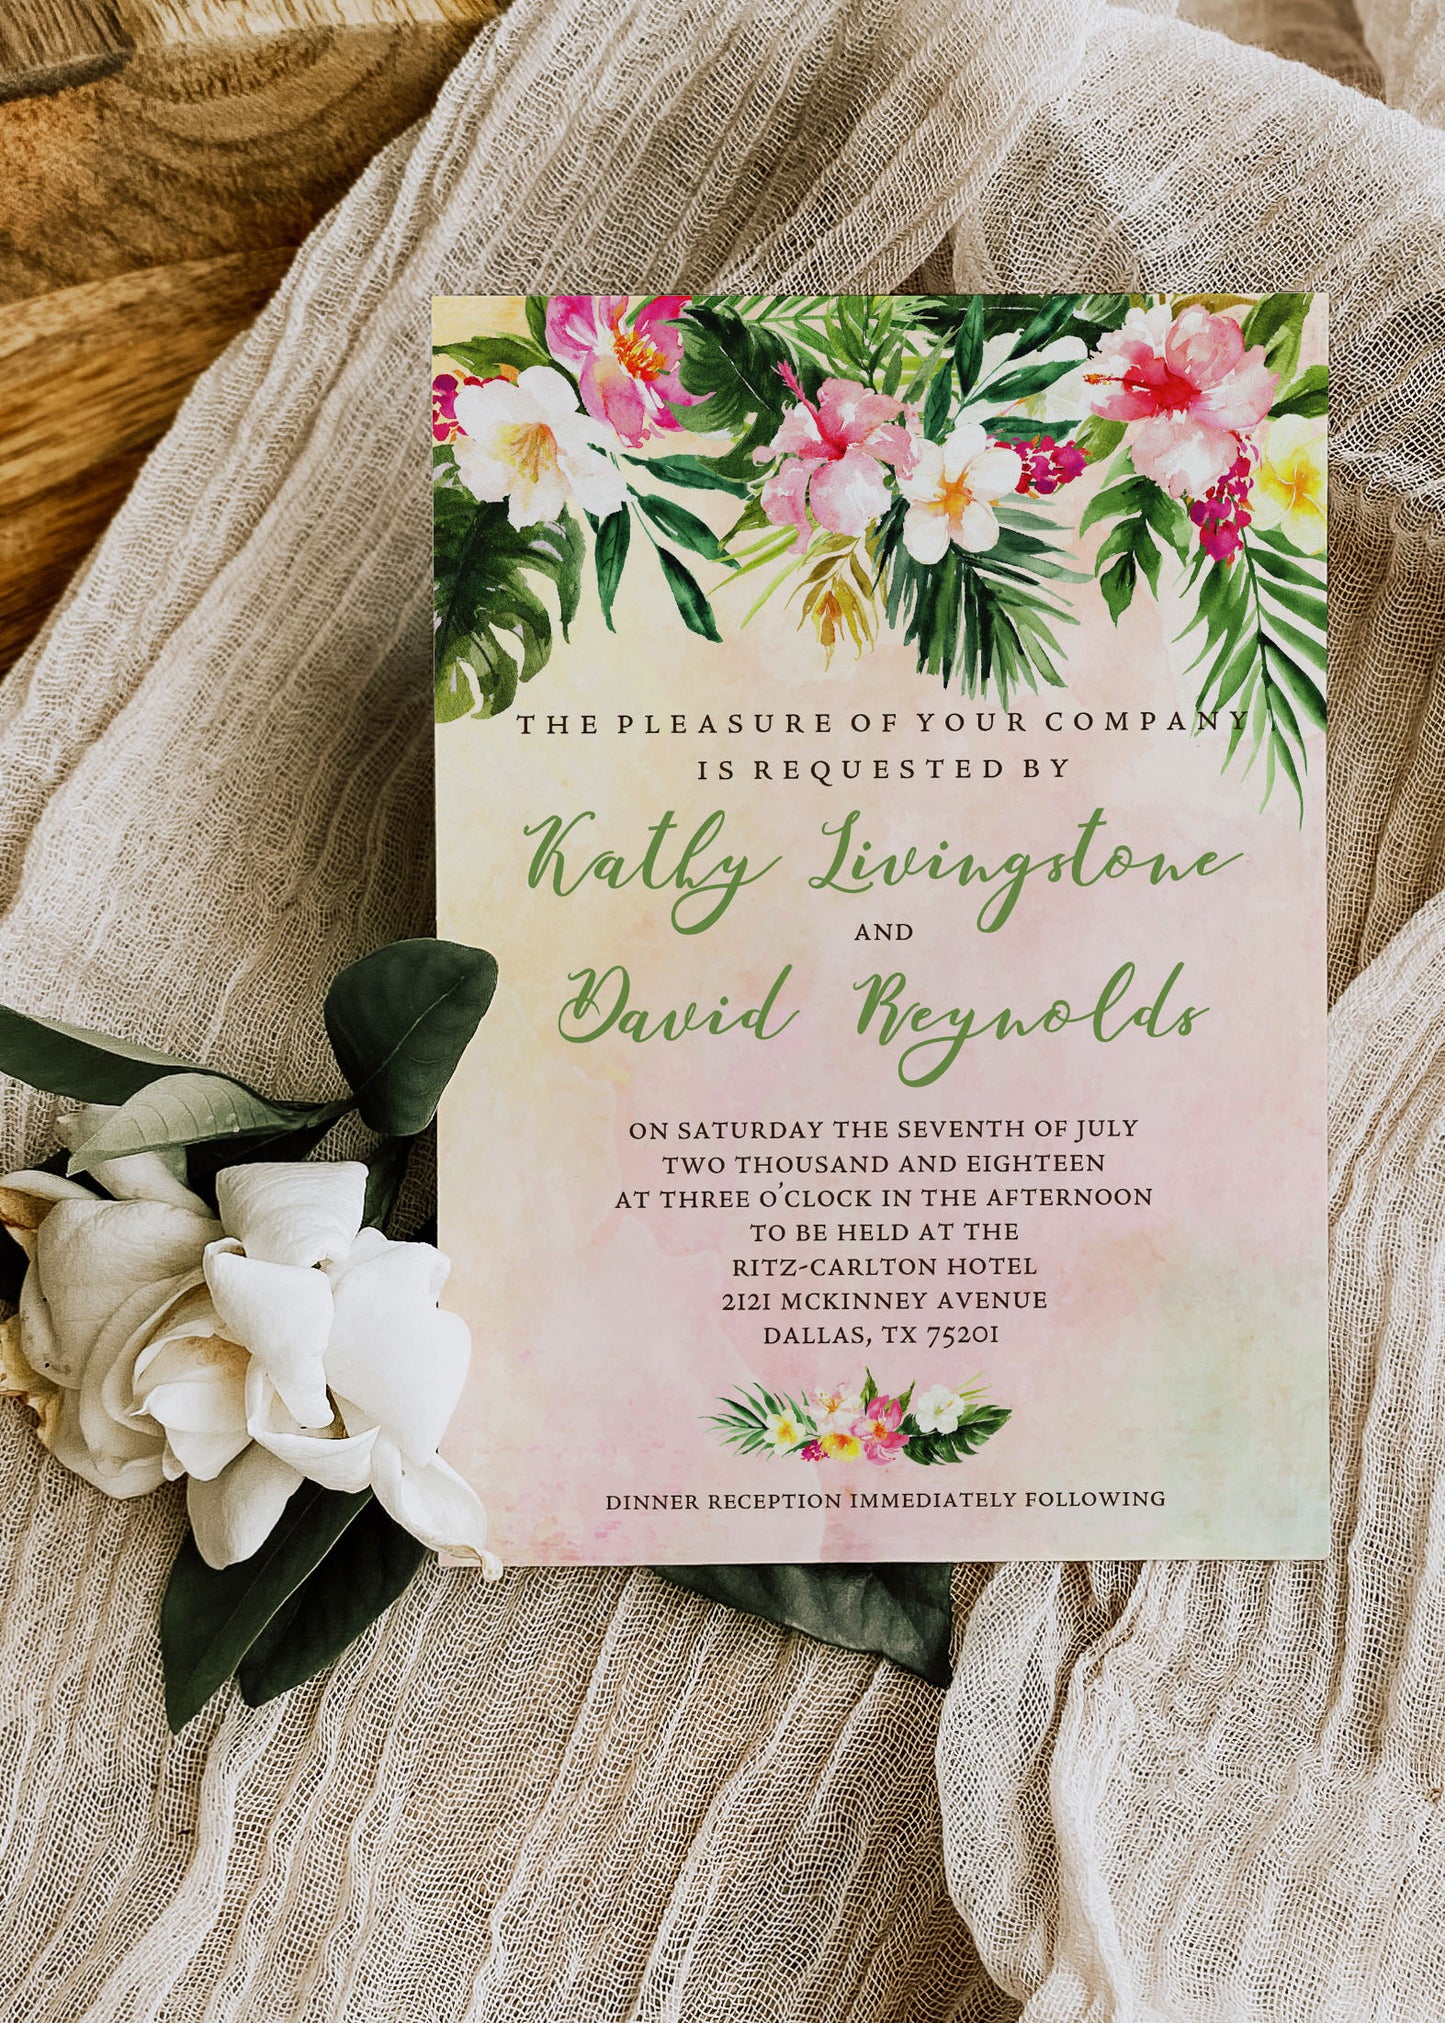 Tropical Floral Watercolor Beach Destination Wedding Invitation and RSVP Suite Digital Download- 'TROPICAL LUSH"